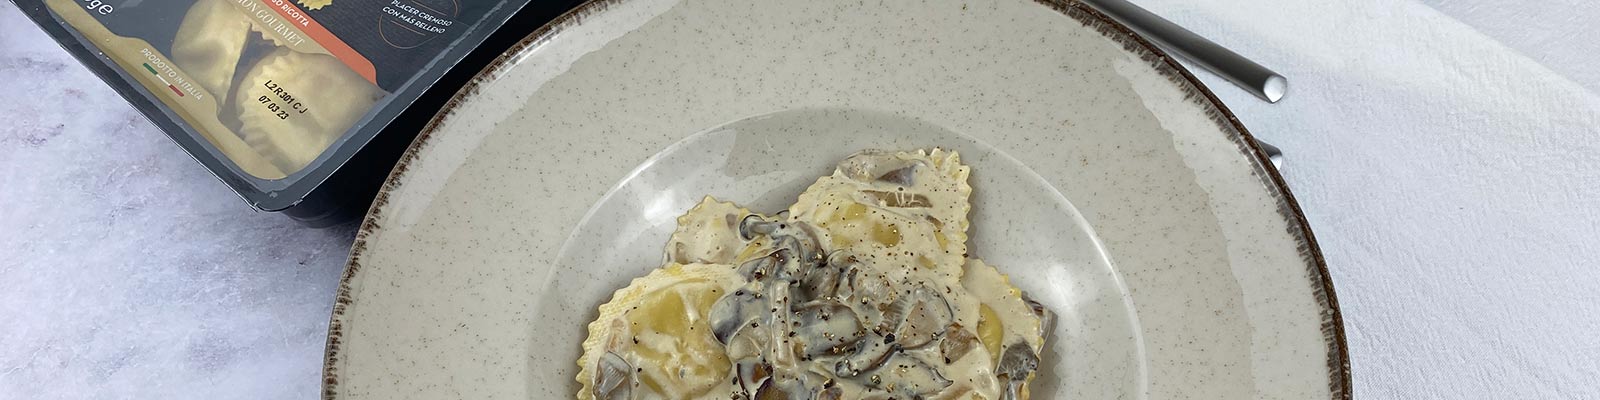 Pasta Garofalo - Salsa para pasta rellena